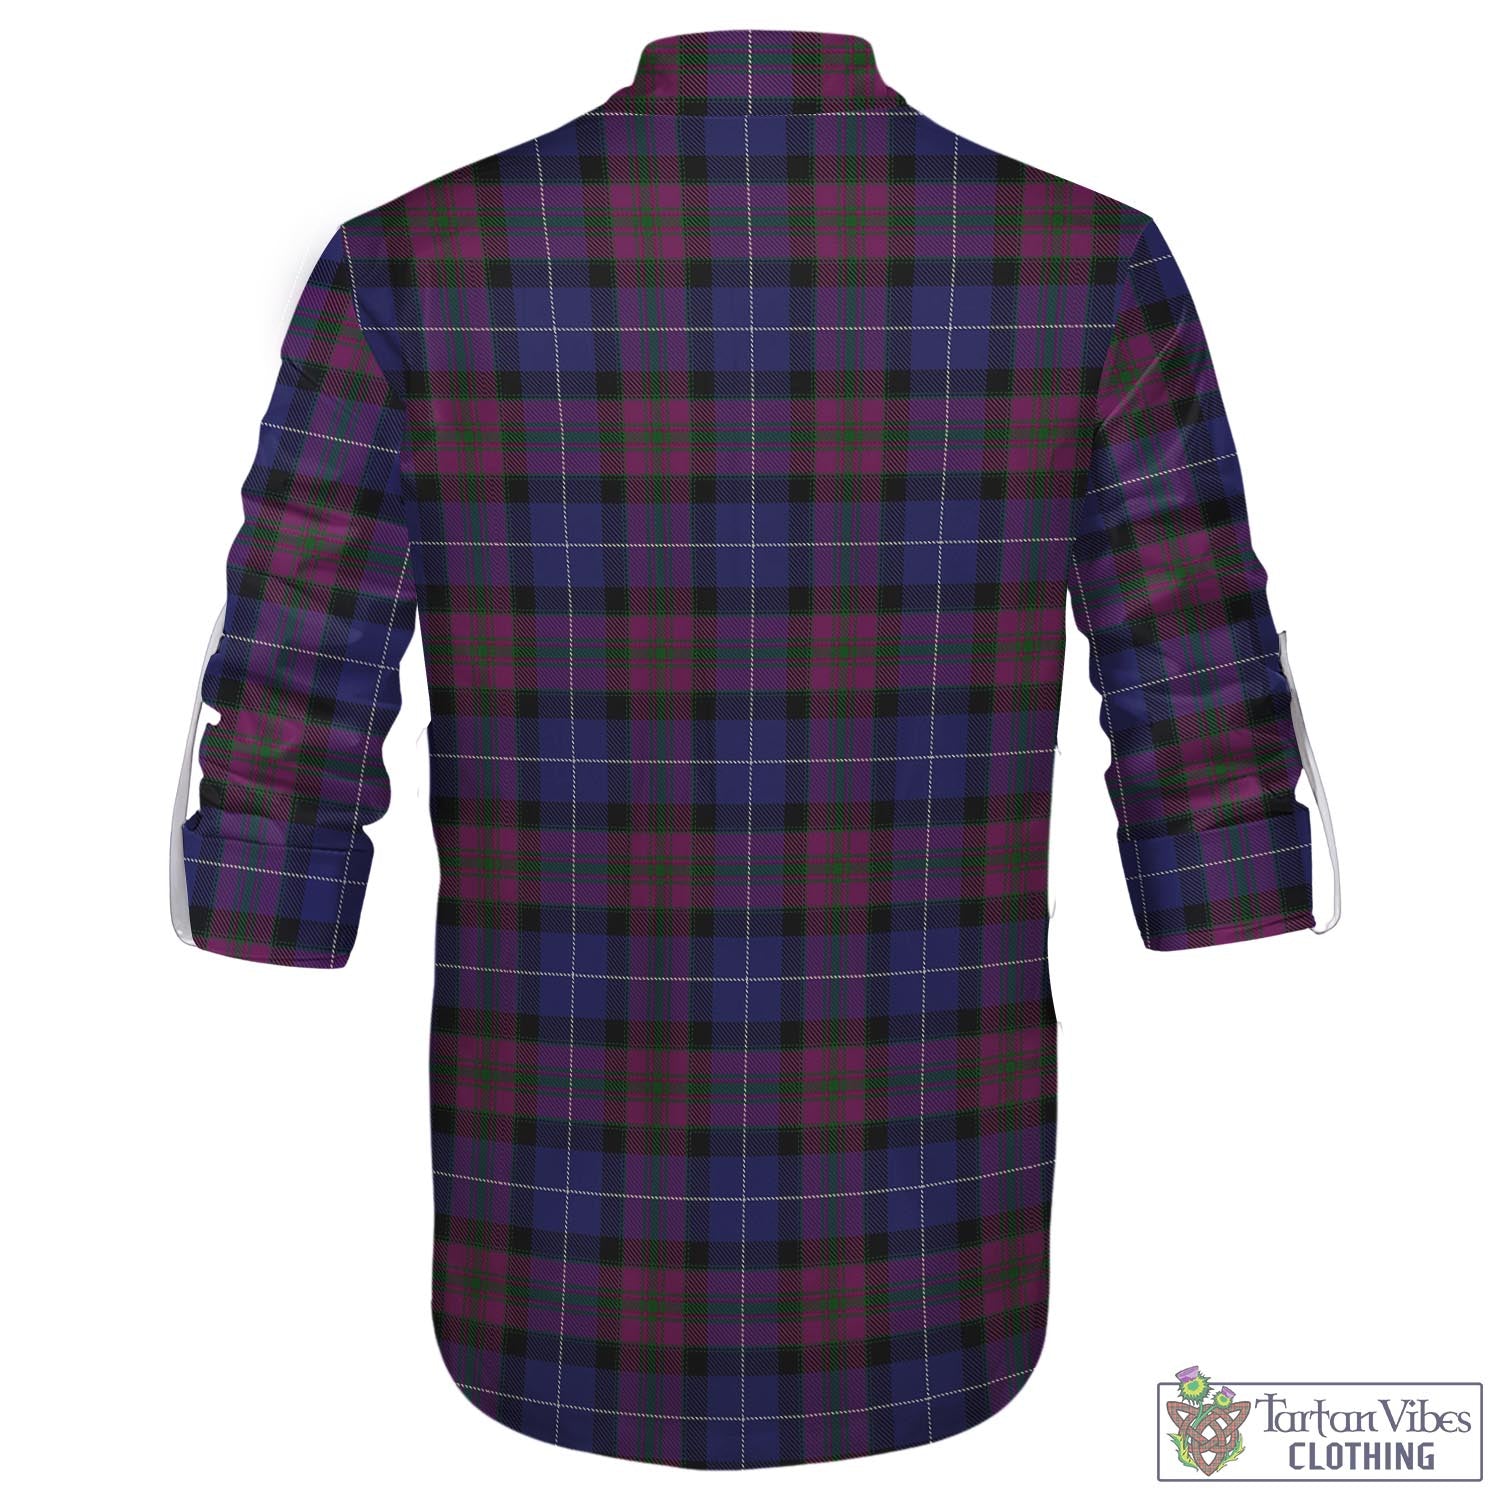 Tartan Vibes Clothing Pride of Scotland Tartan Men's Scottish Traditional Jacobite Ghillie Kilt Shirt